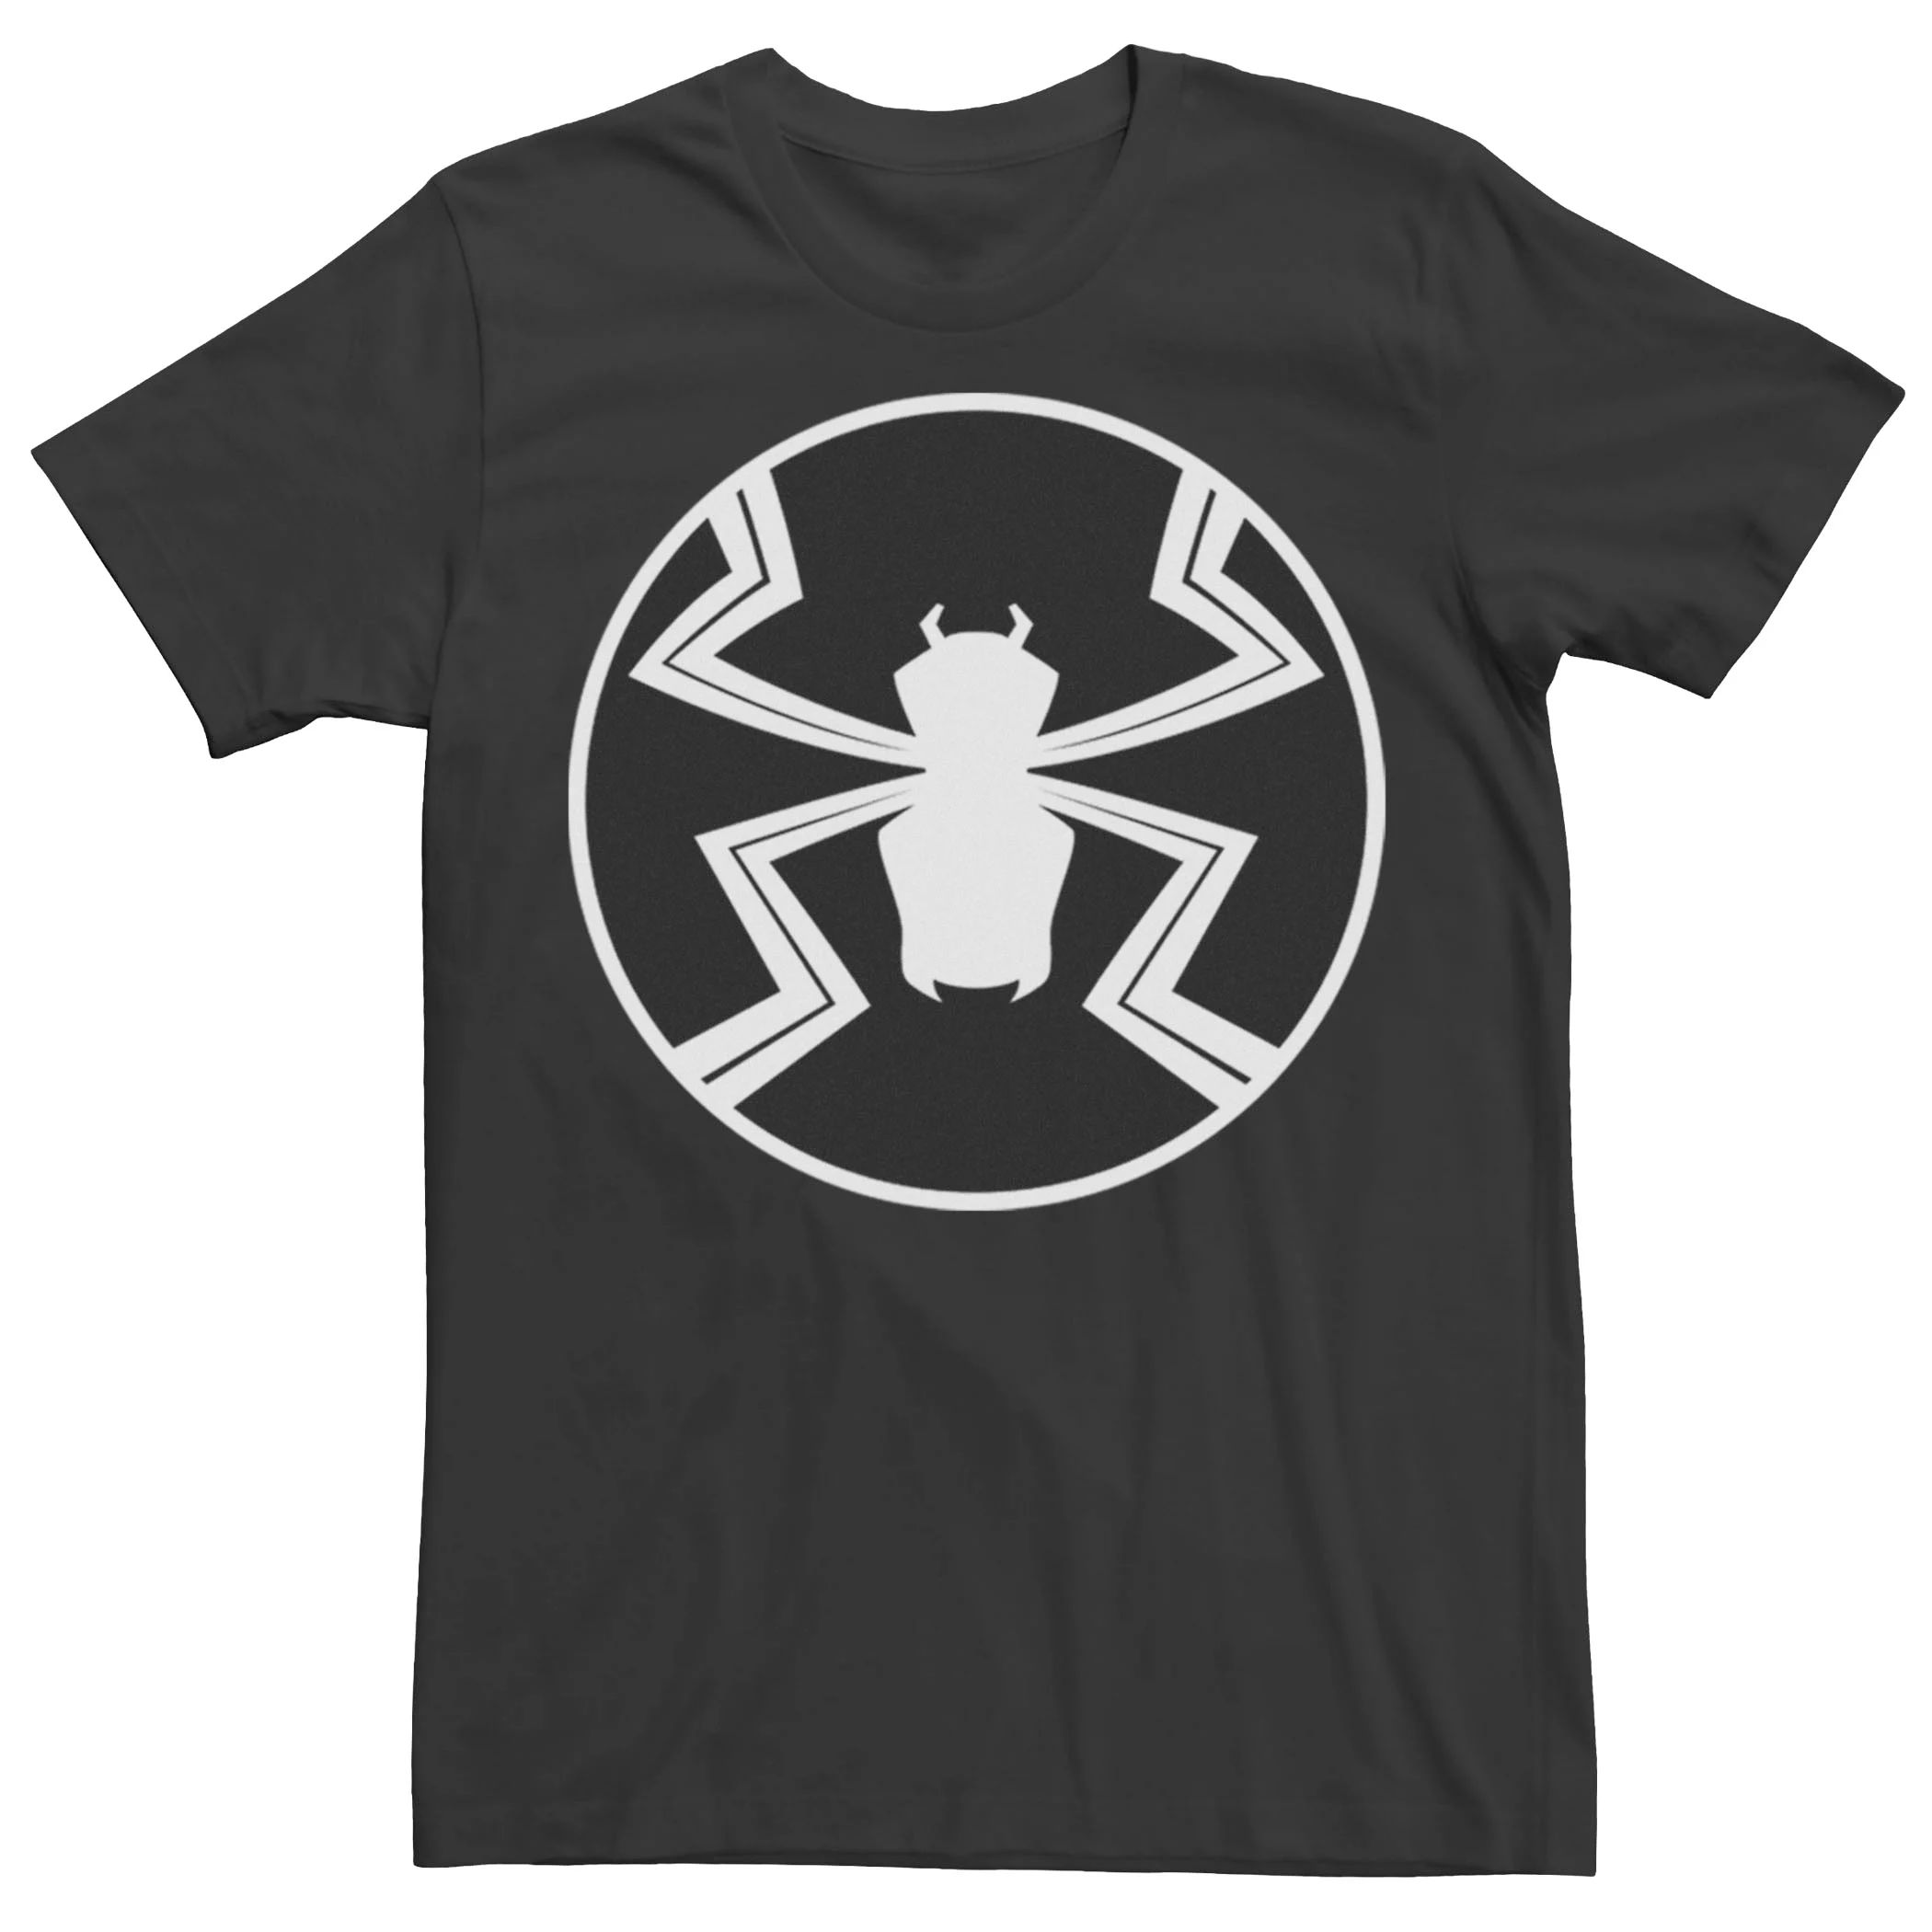 Мужская футболка с графическим логотипом Marvel Agent Venom